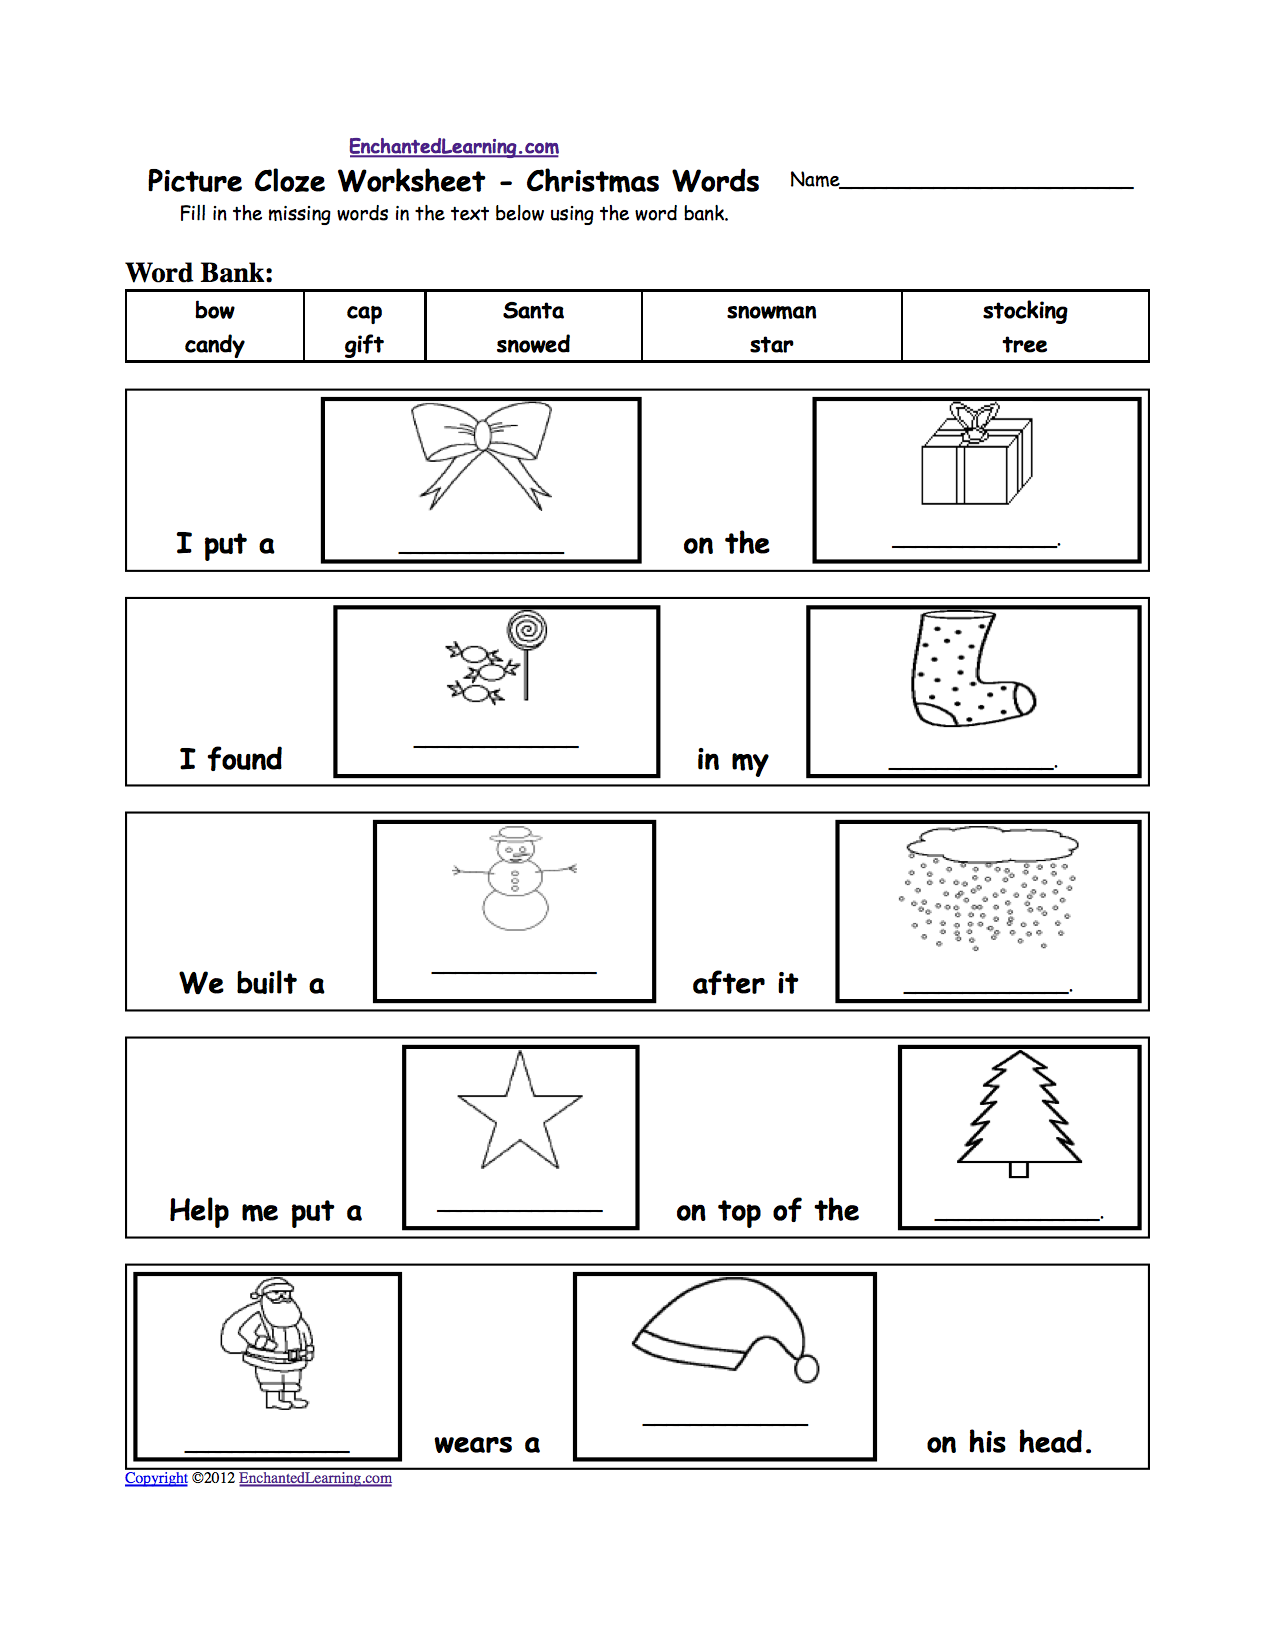 picture-cloze-worksheets-enchantedlearning